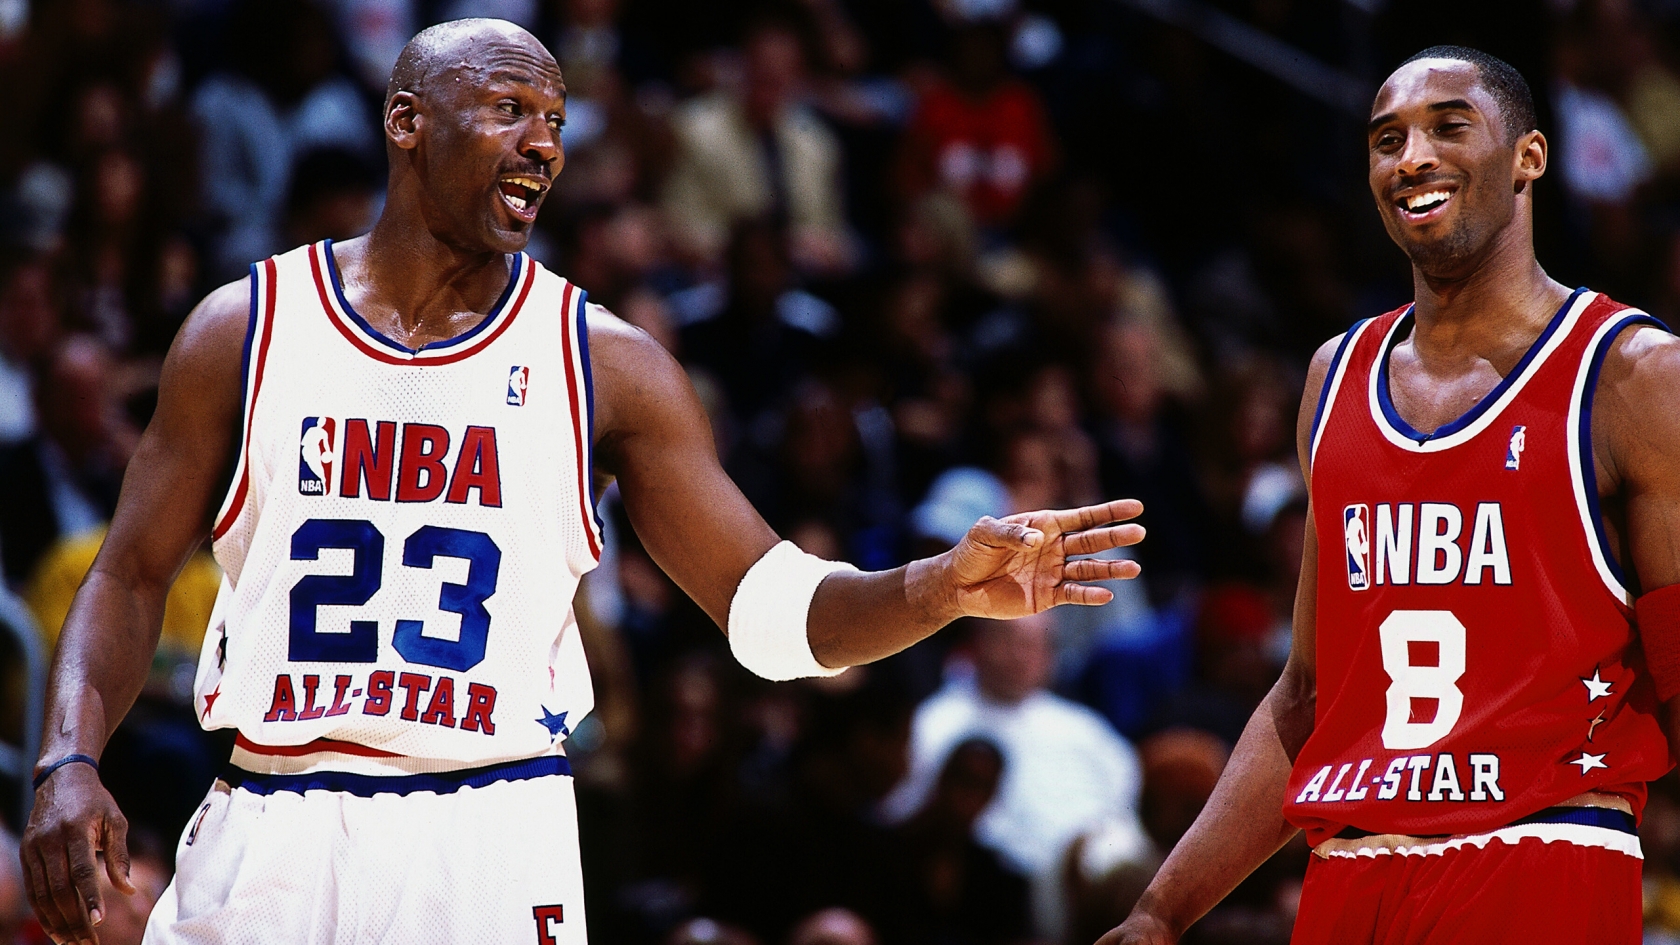 Kobe Bryant and Michael Jordan for 1680 x 945 HDTV resolution